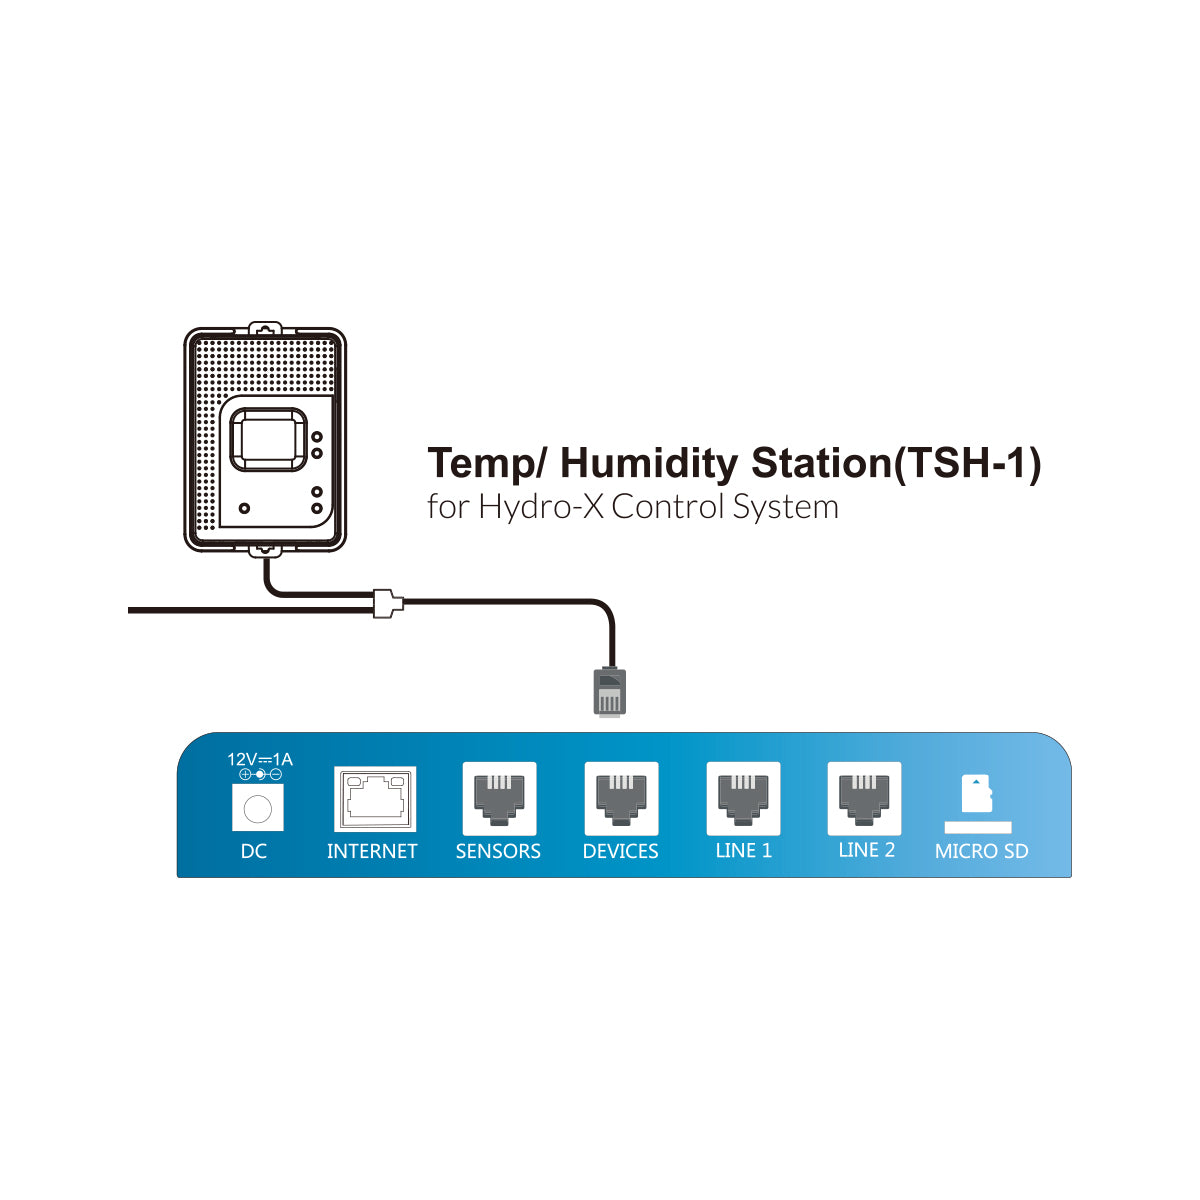 Trol Master Temperature / Humidity Station (TSH-1)